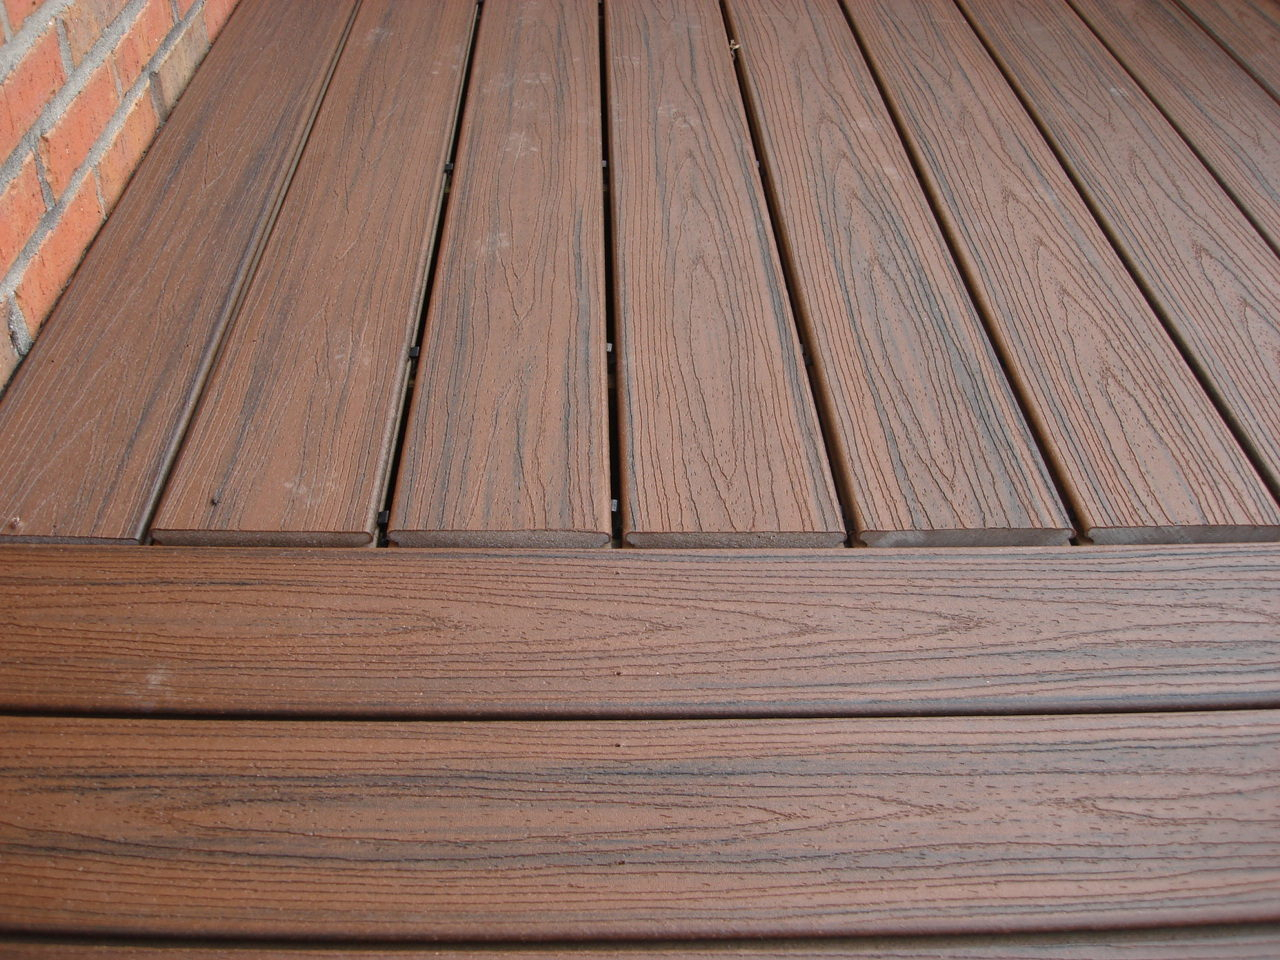 joist spacing for trex deck boards